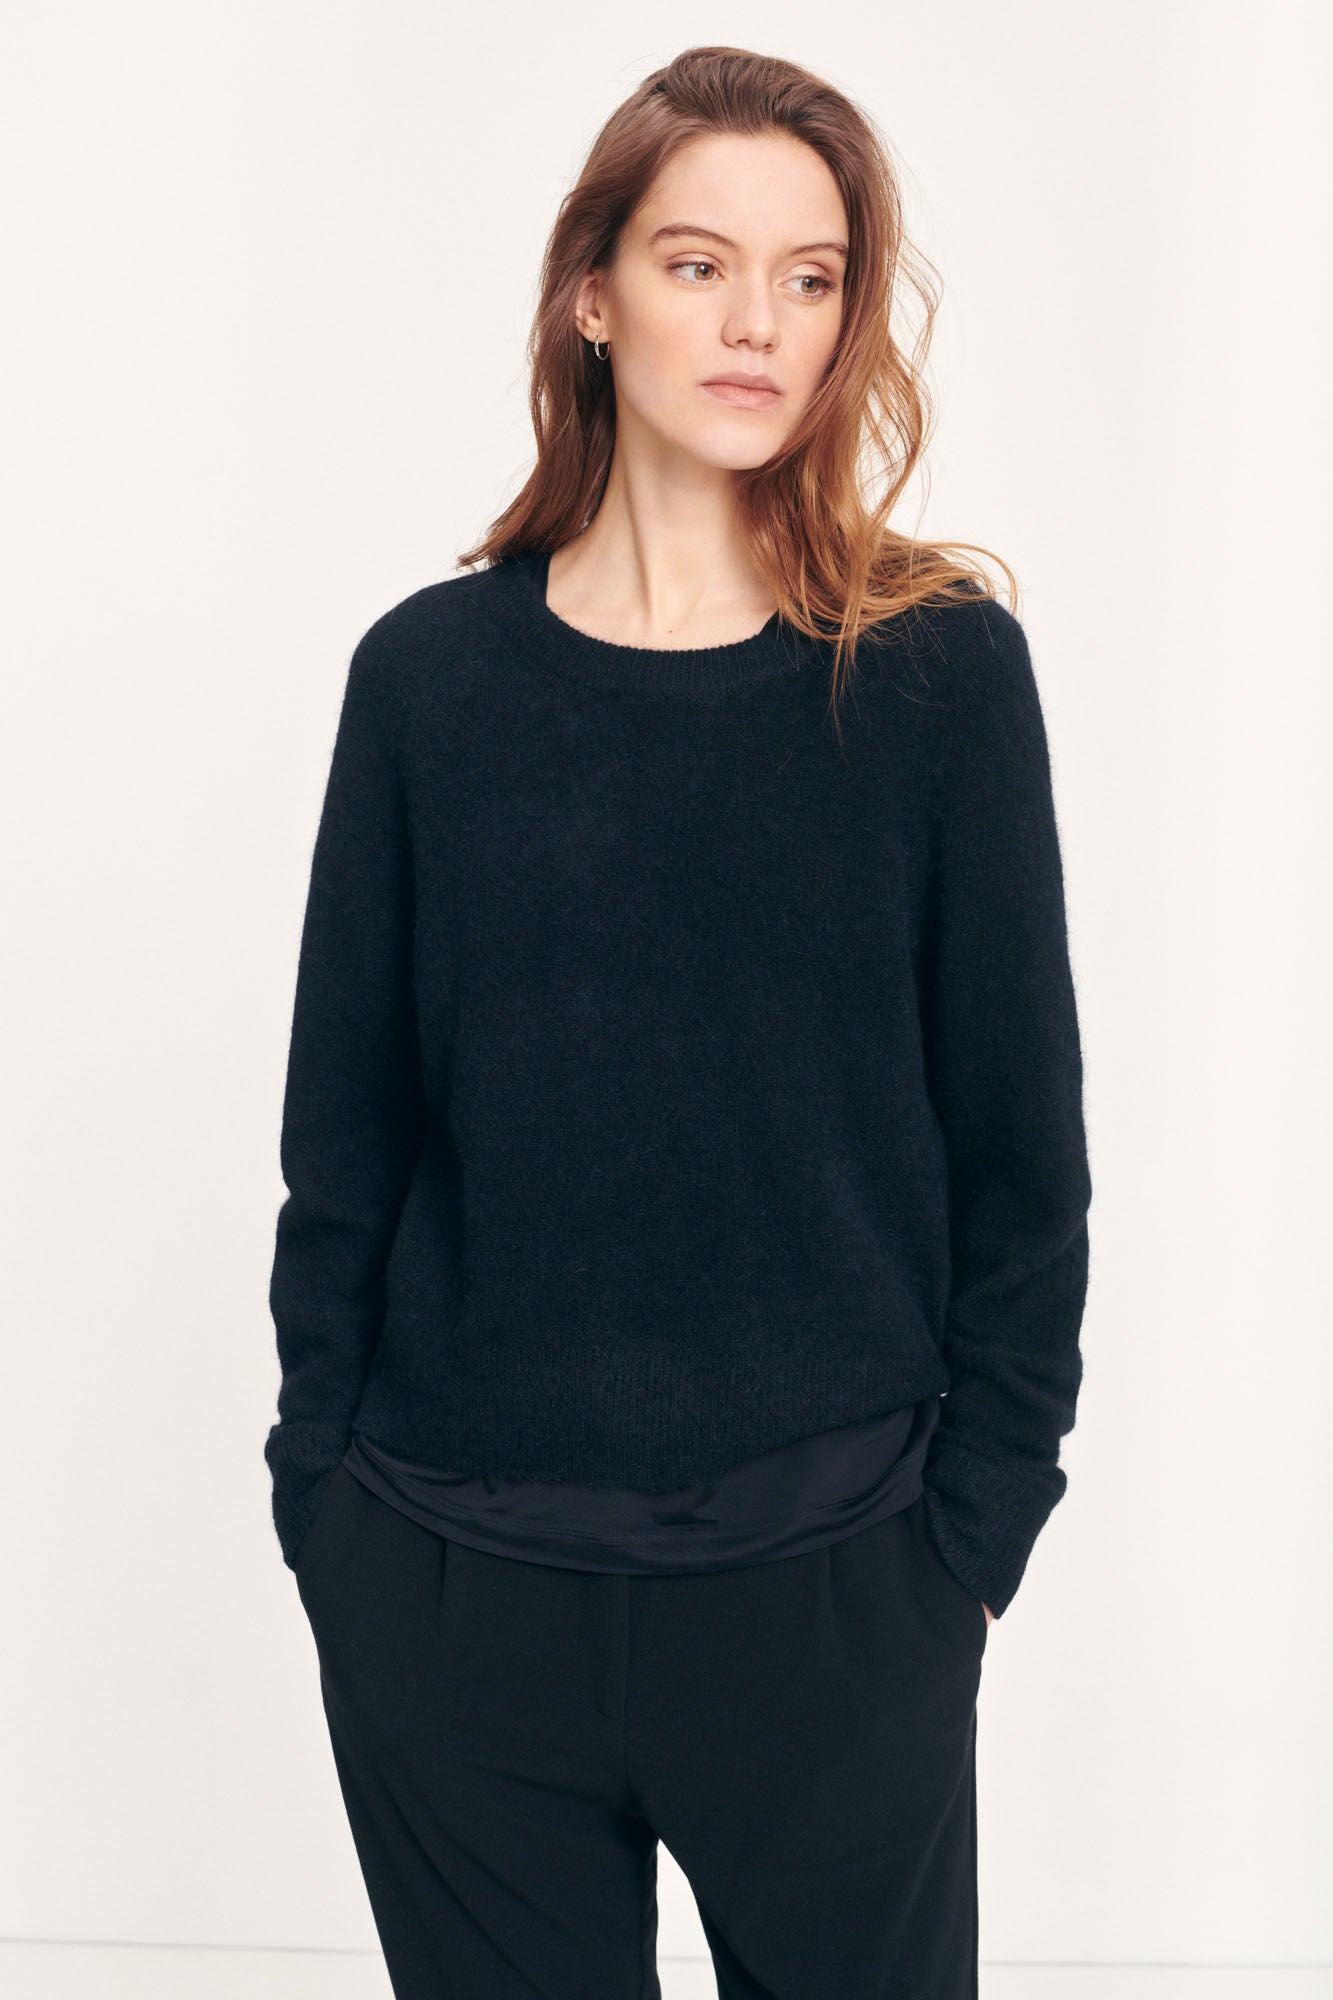 Nor on short alpaca sweater in black